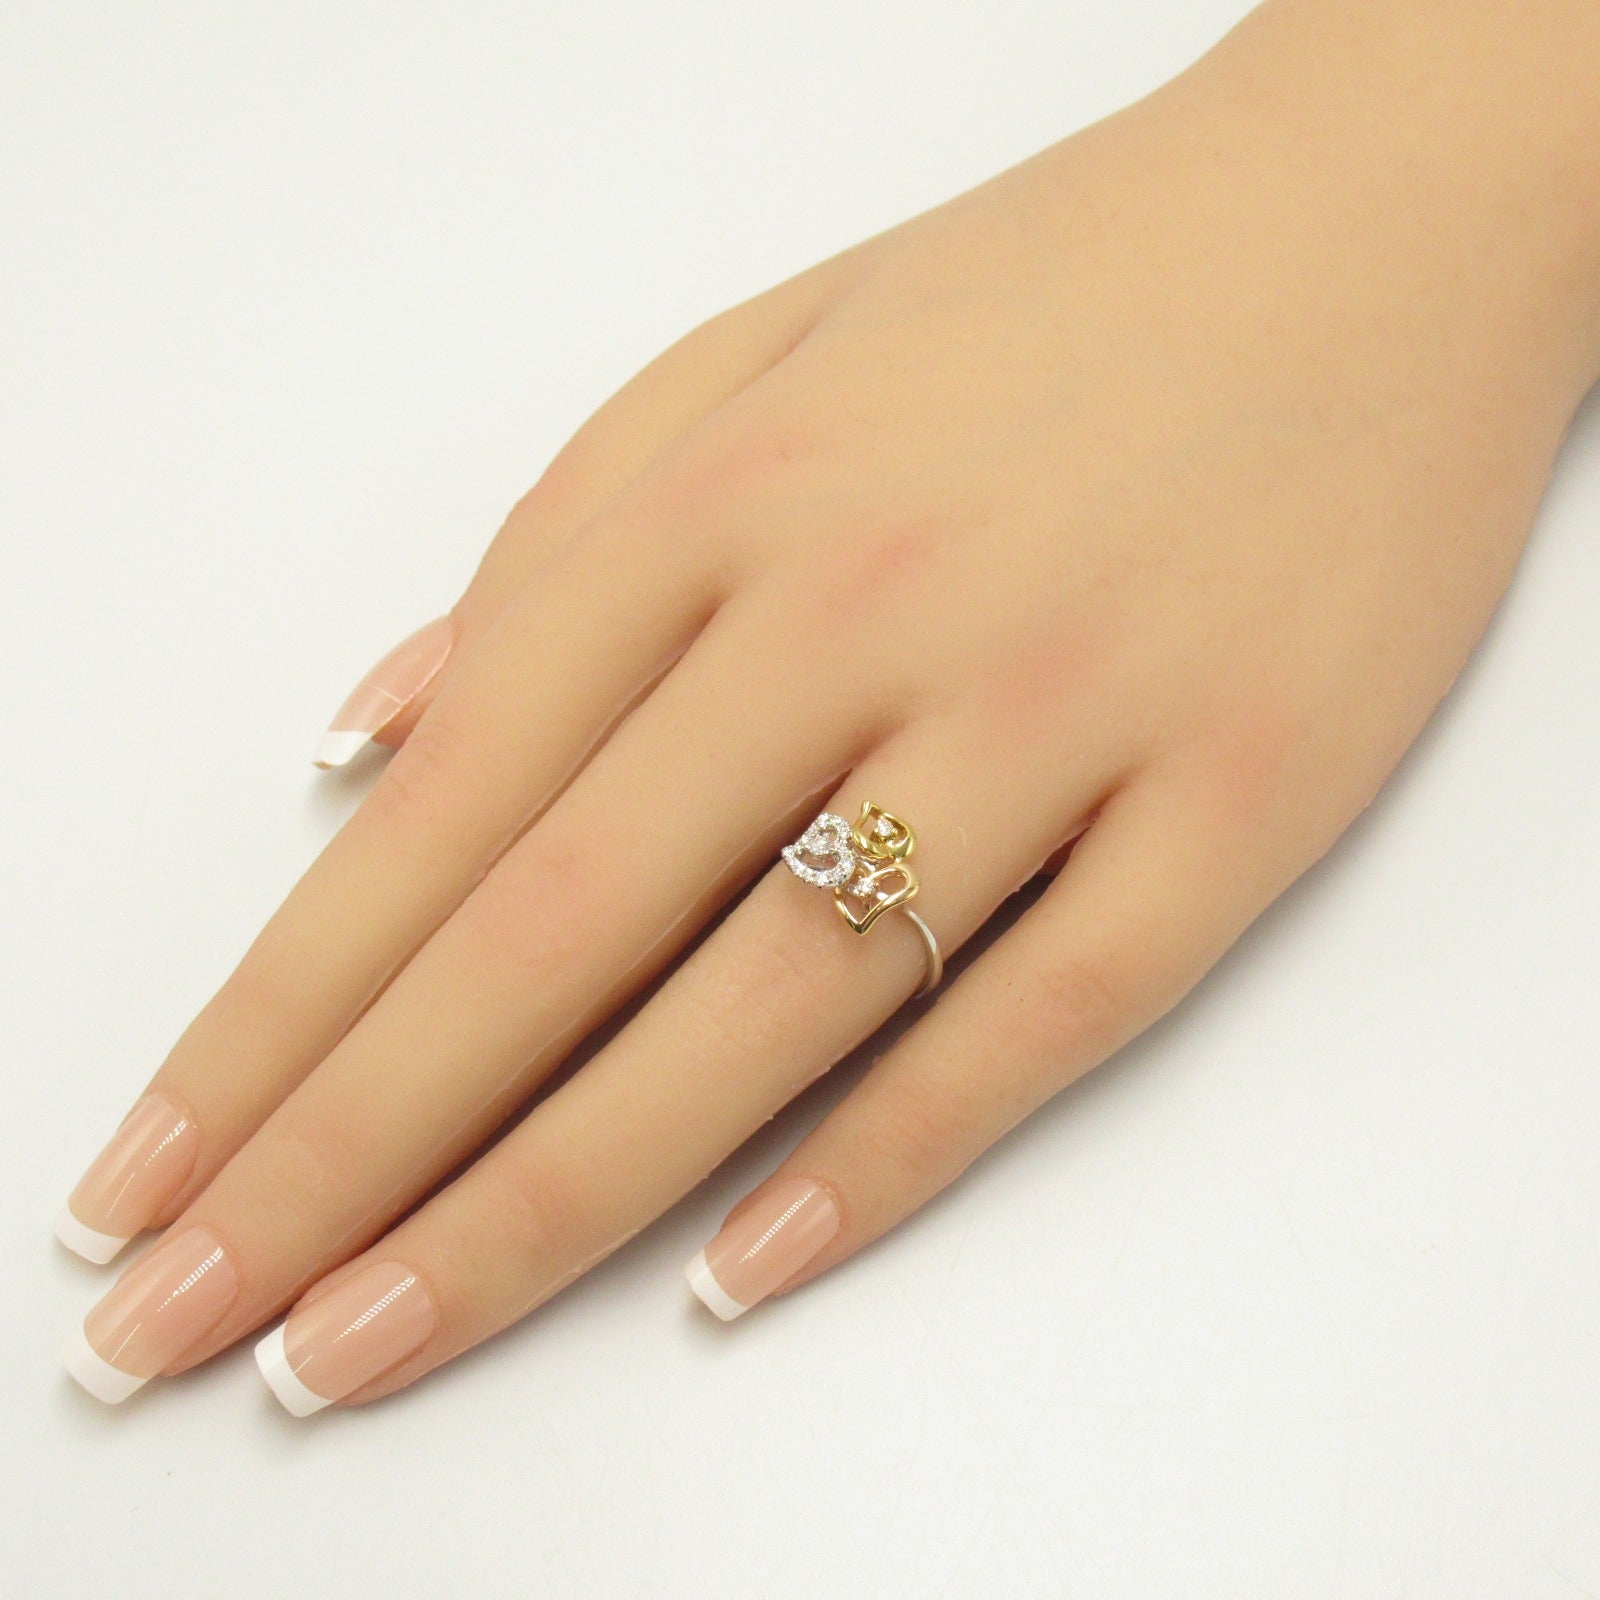 Jewelry Jewelry Diamond Ring Ring Ring Jewelry Diamond K18 Three G  Clear Diamond 2.8g